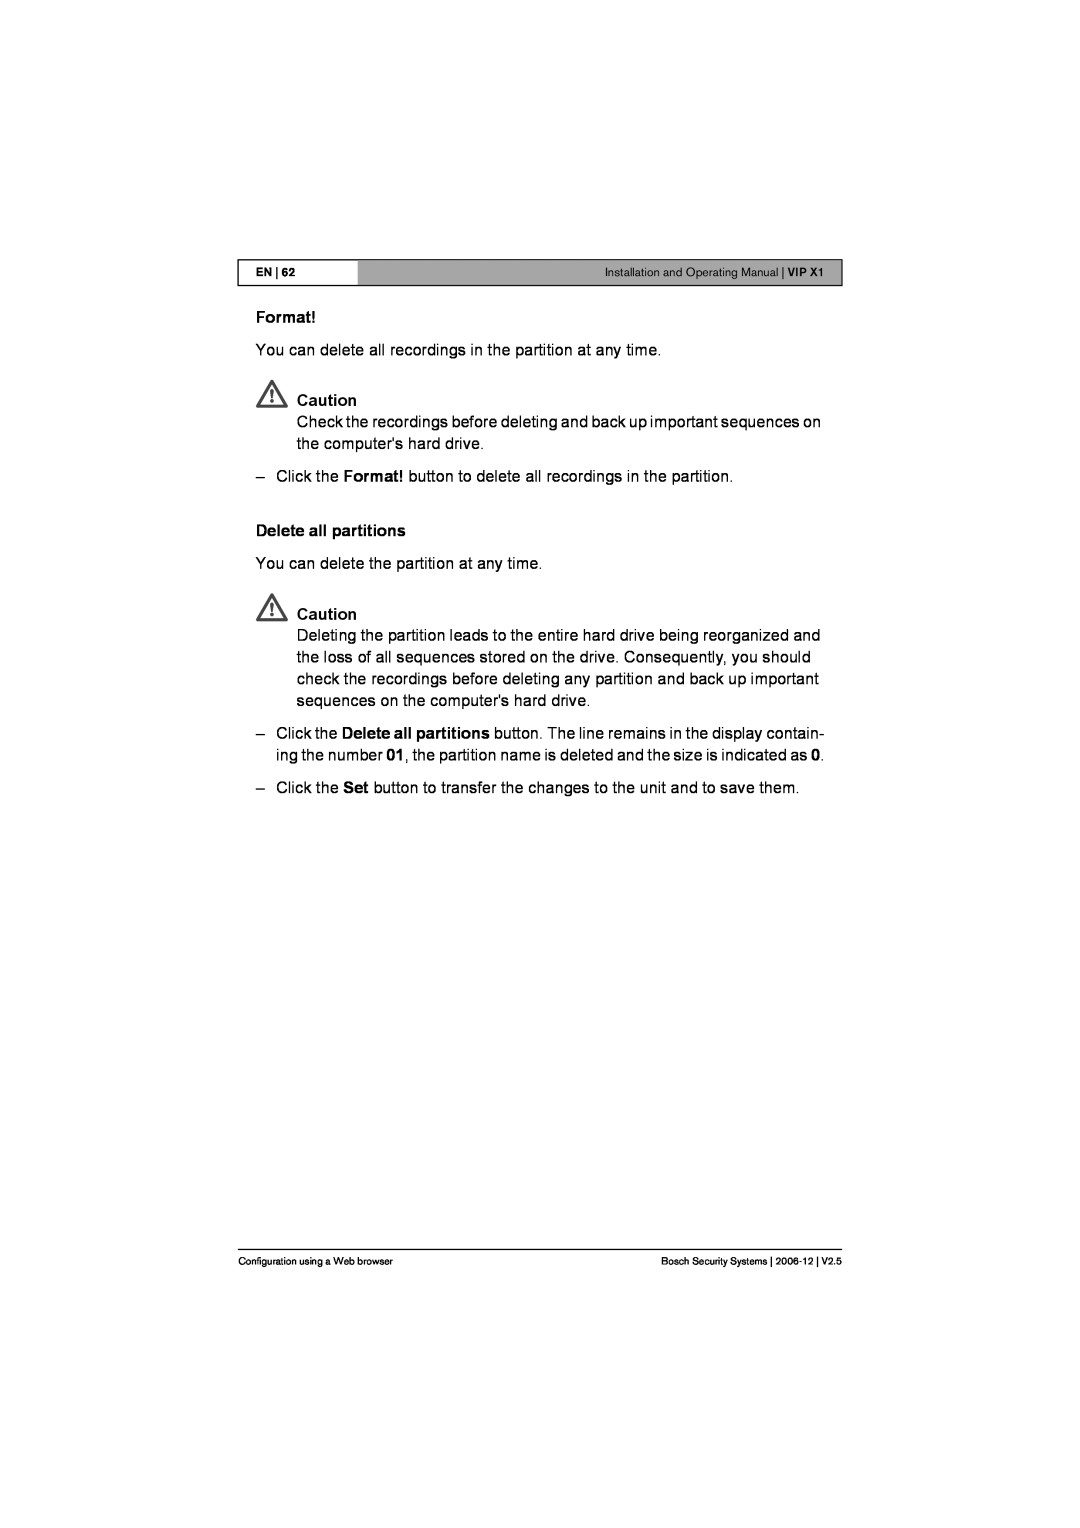 Bosch Appliances VIP X1 manual Format, Delete all partitions 